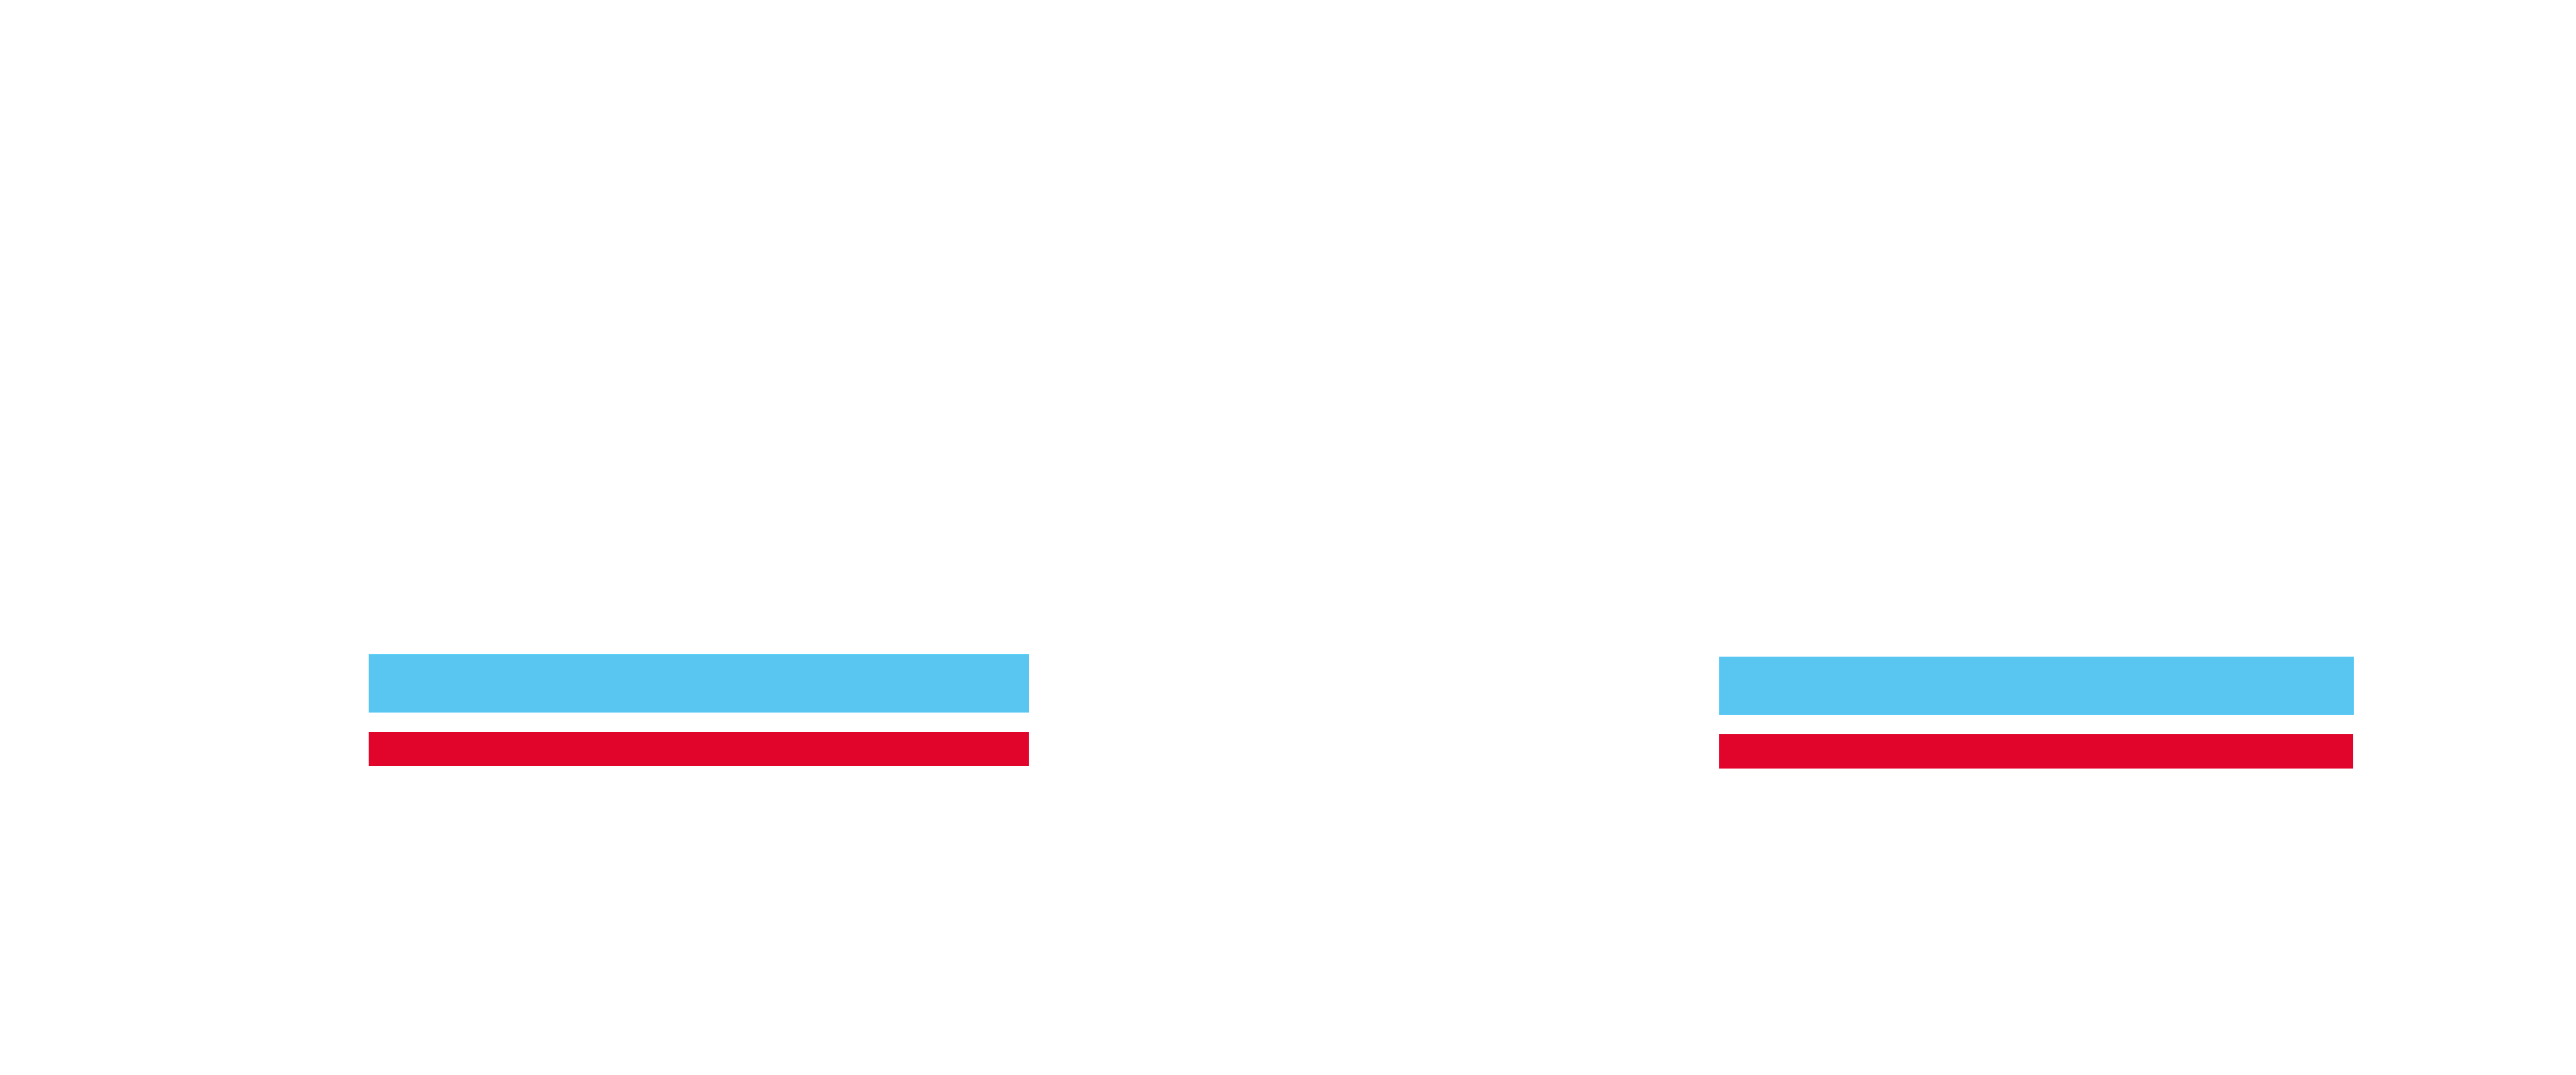 Hidramar Group shipyards in west Africa